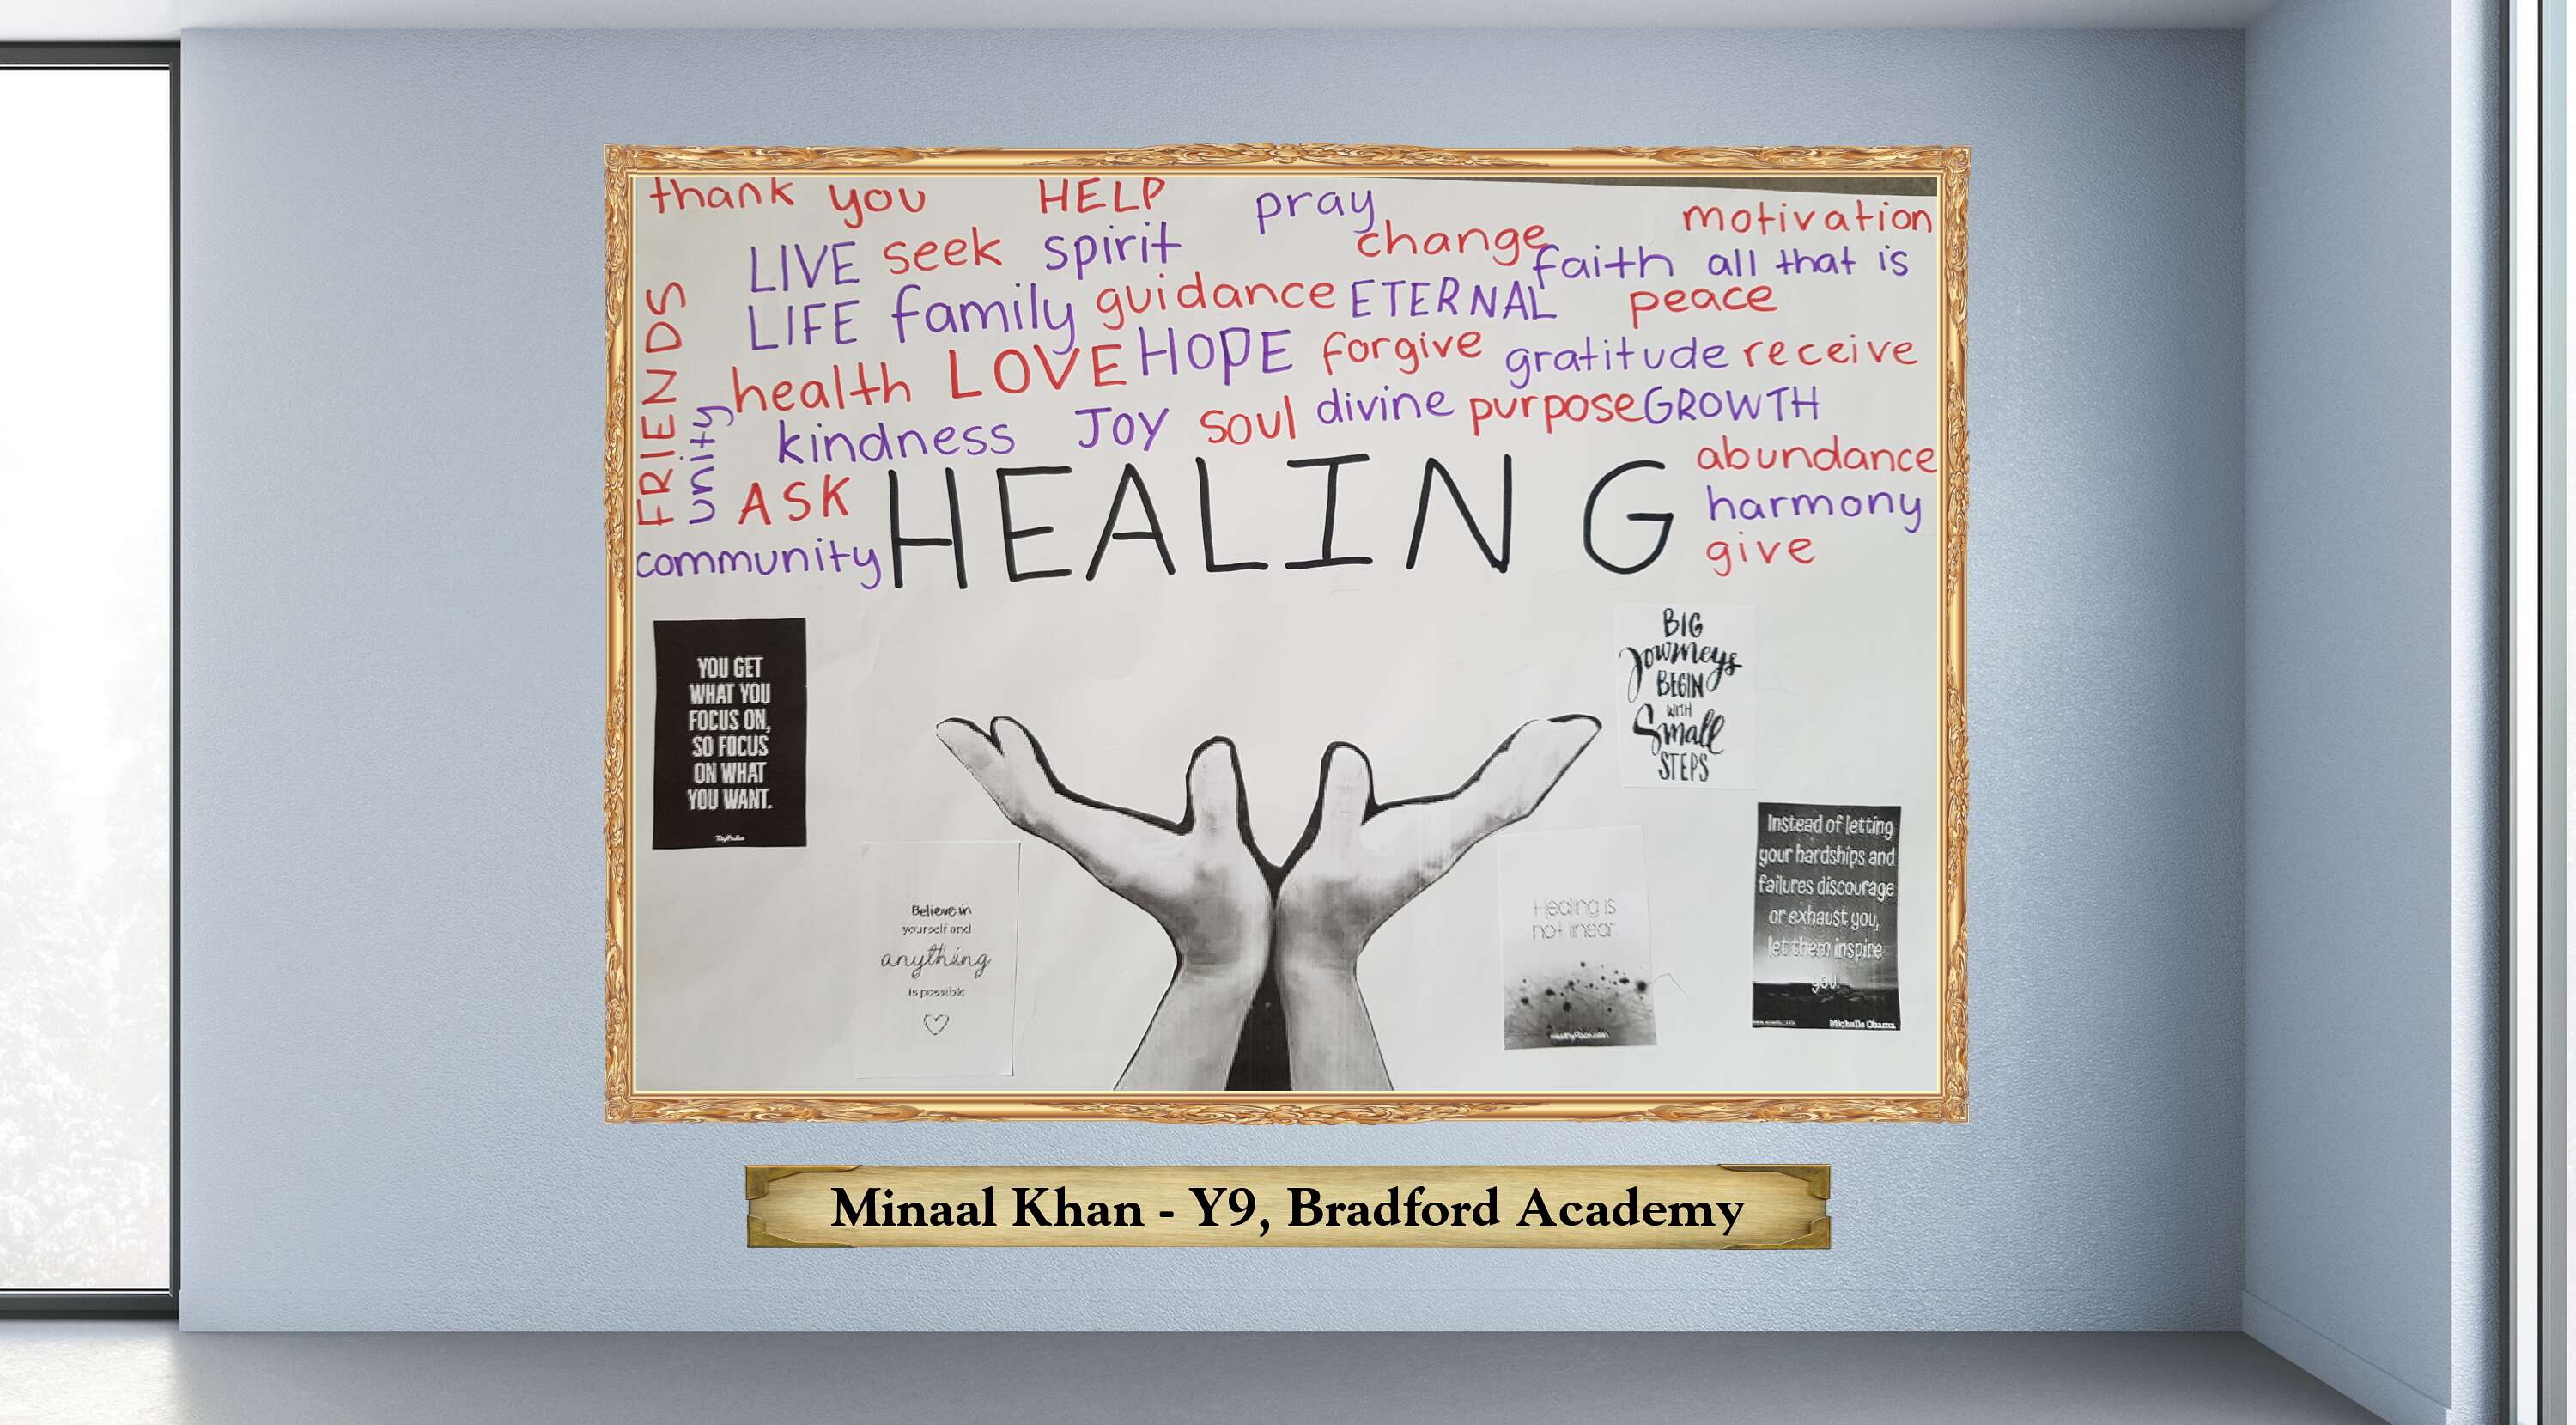 Minaal Khan - Y9, Bradford Academy